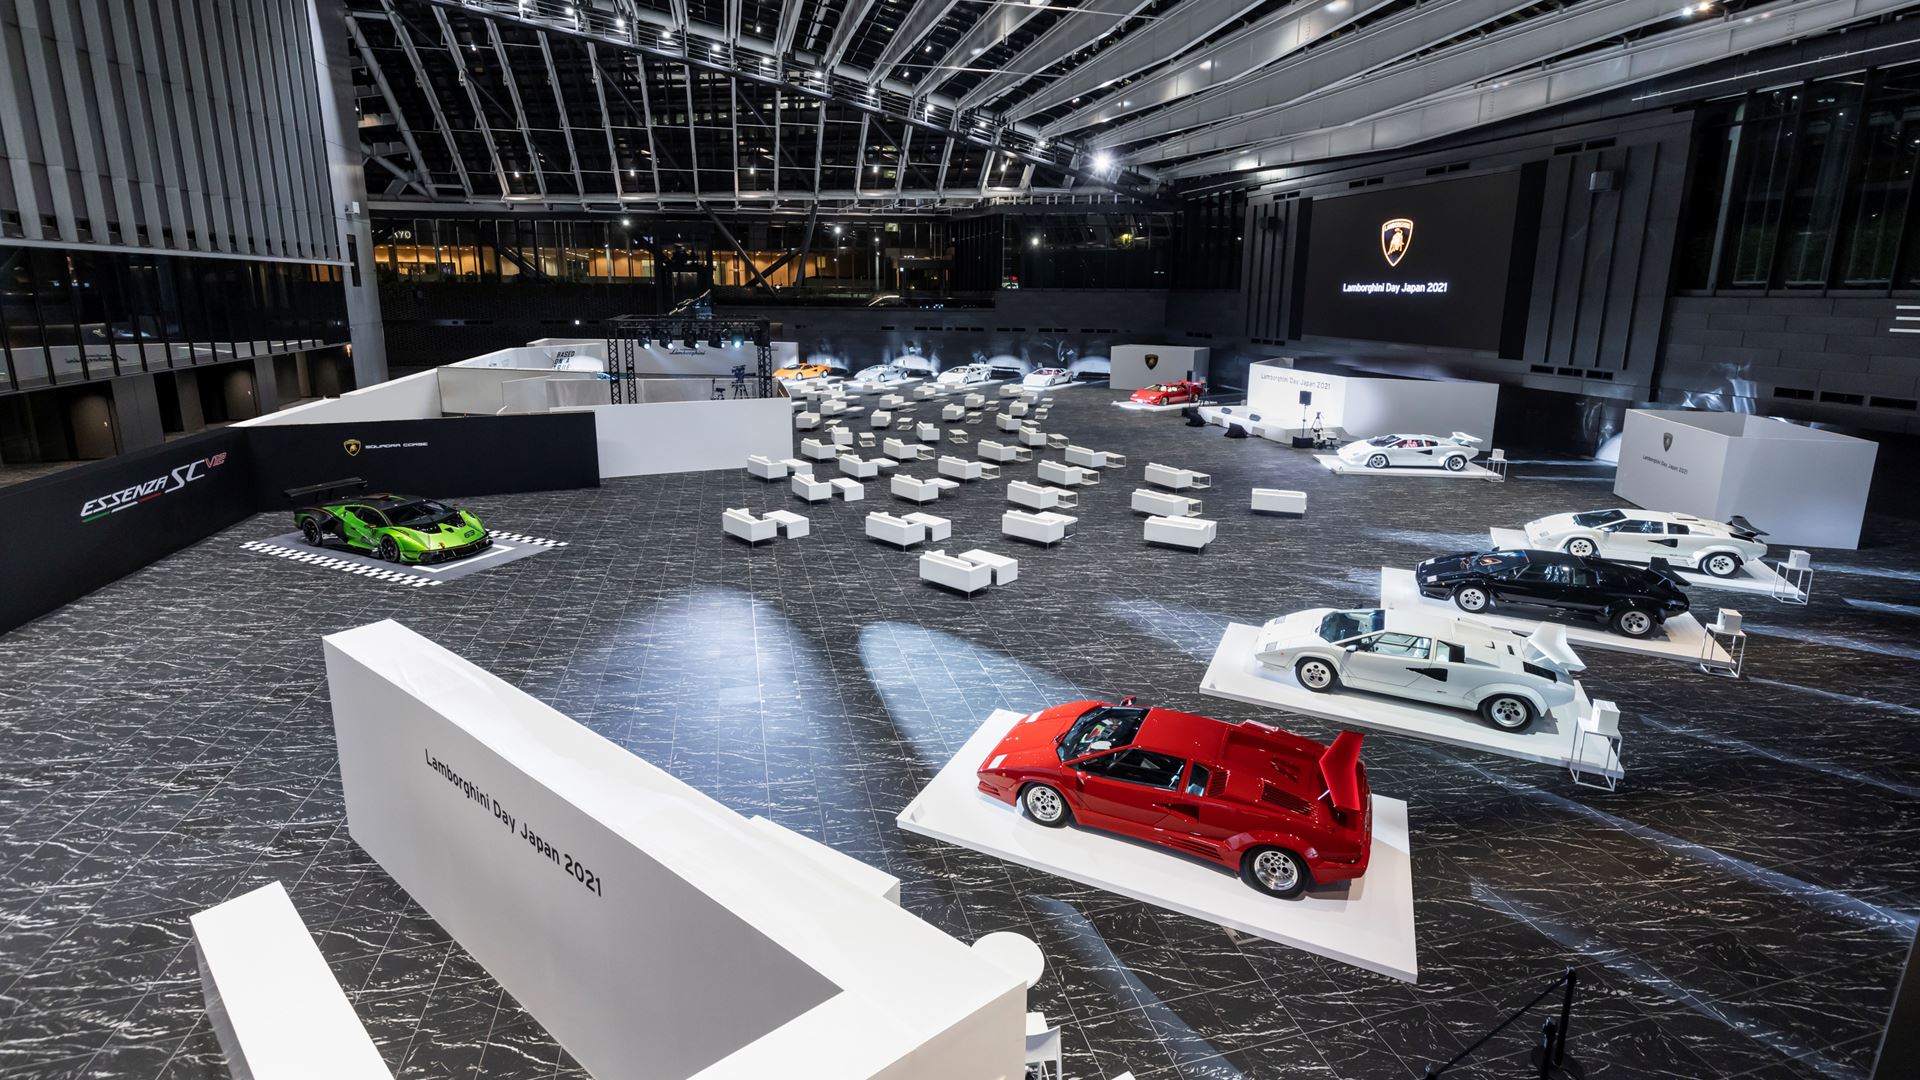 Lamborghini Day Japan 2021 commemorating the 50th anniversary of Countach - Image 1